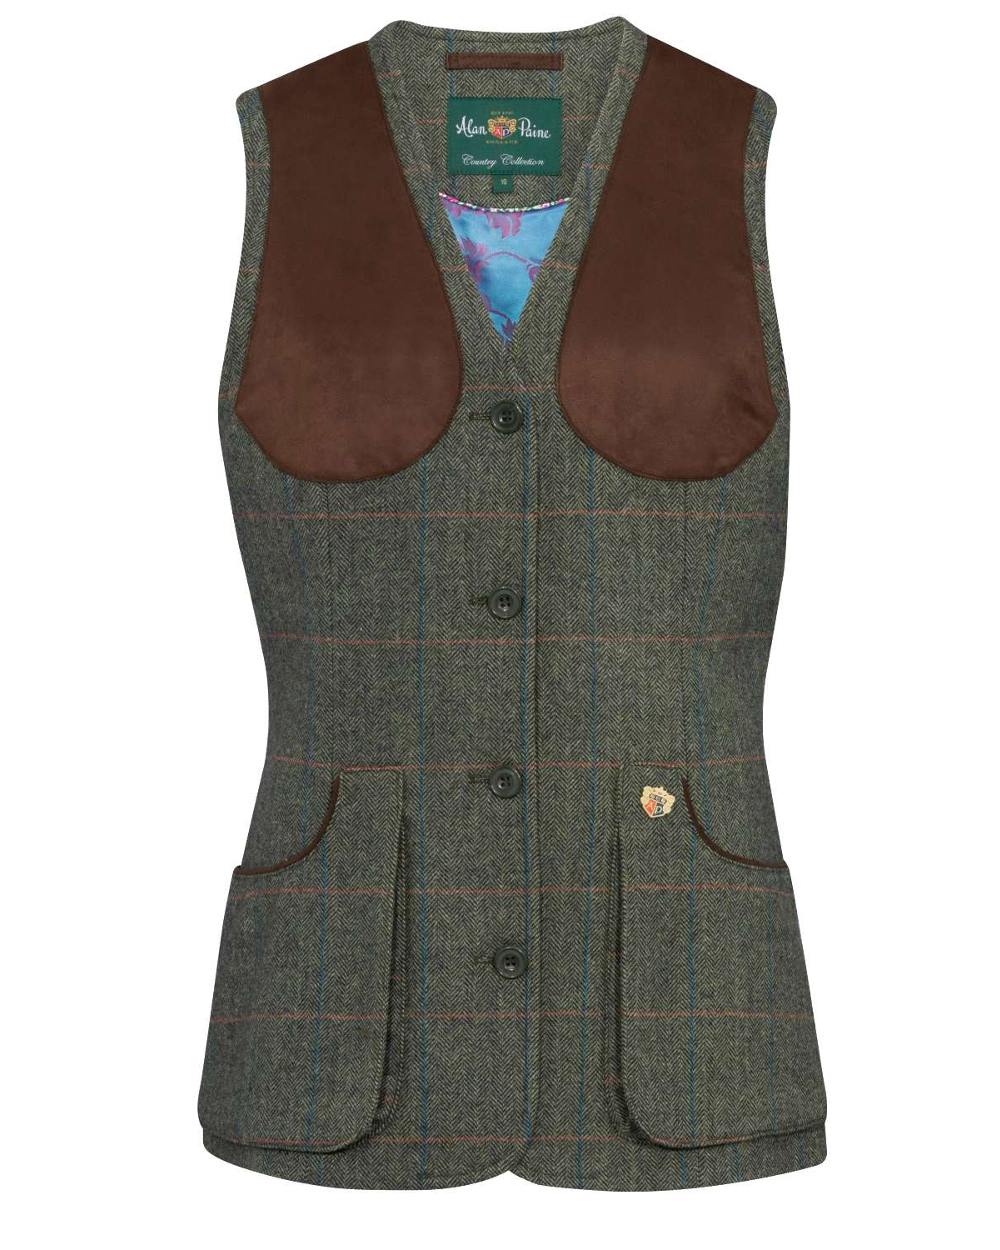 Alan Paine Combrook Ladies Tweed Shooting Waistcoat in Spruce 